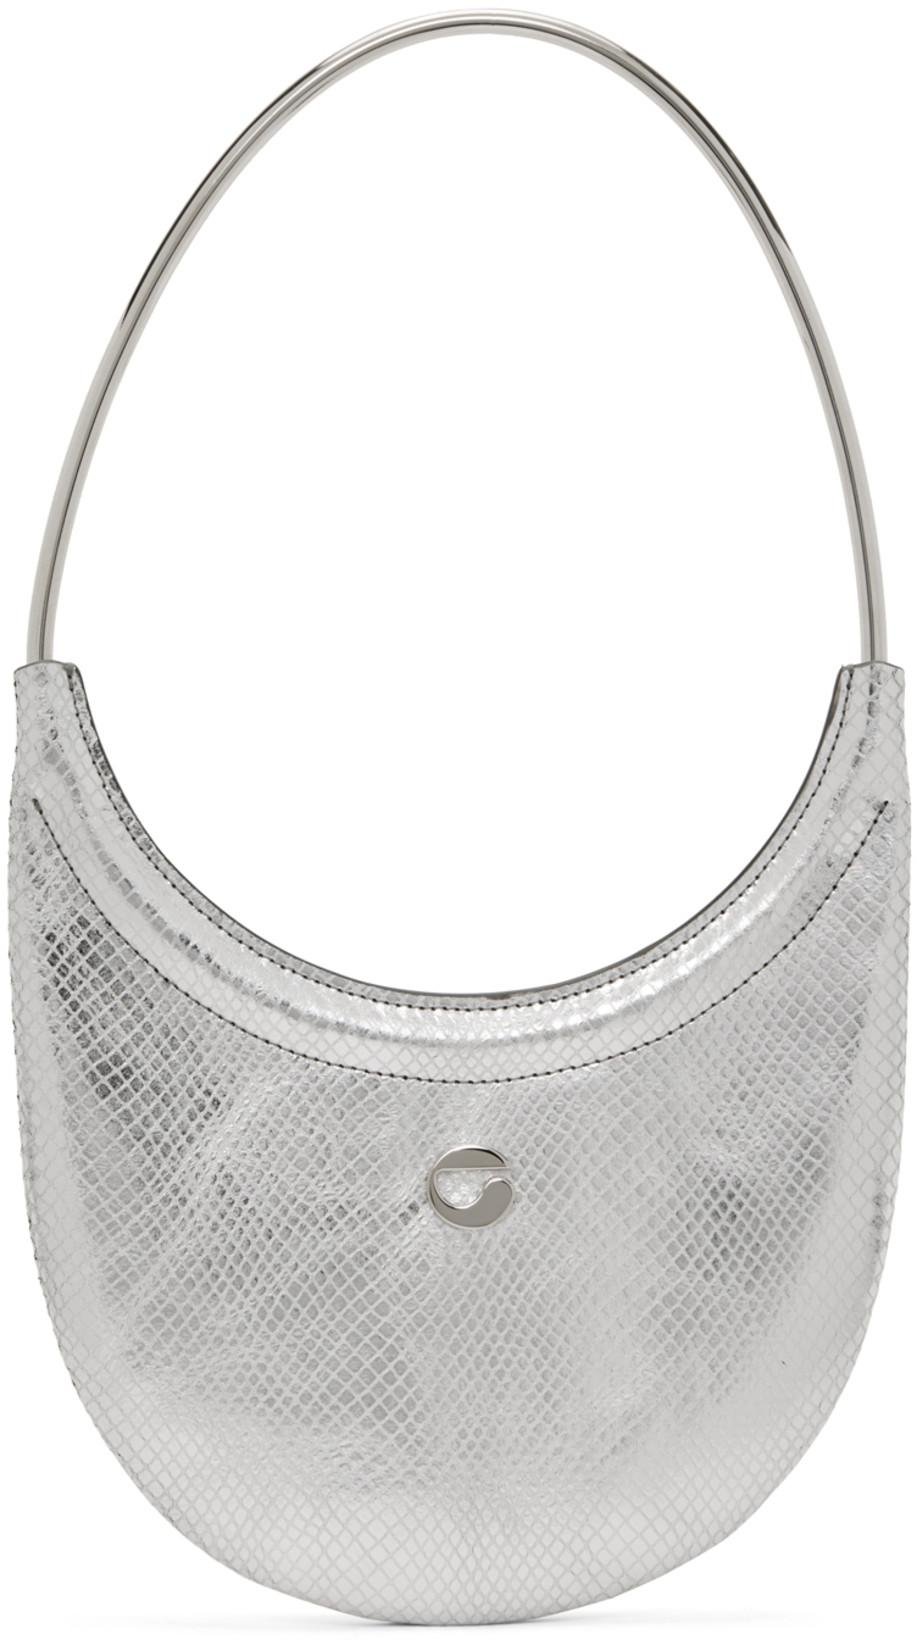 Silver Python Ring Swipe Bag by COPERNI